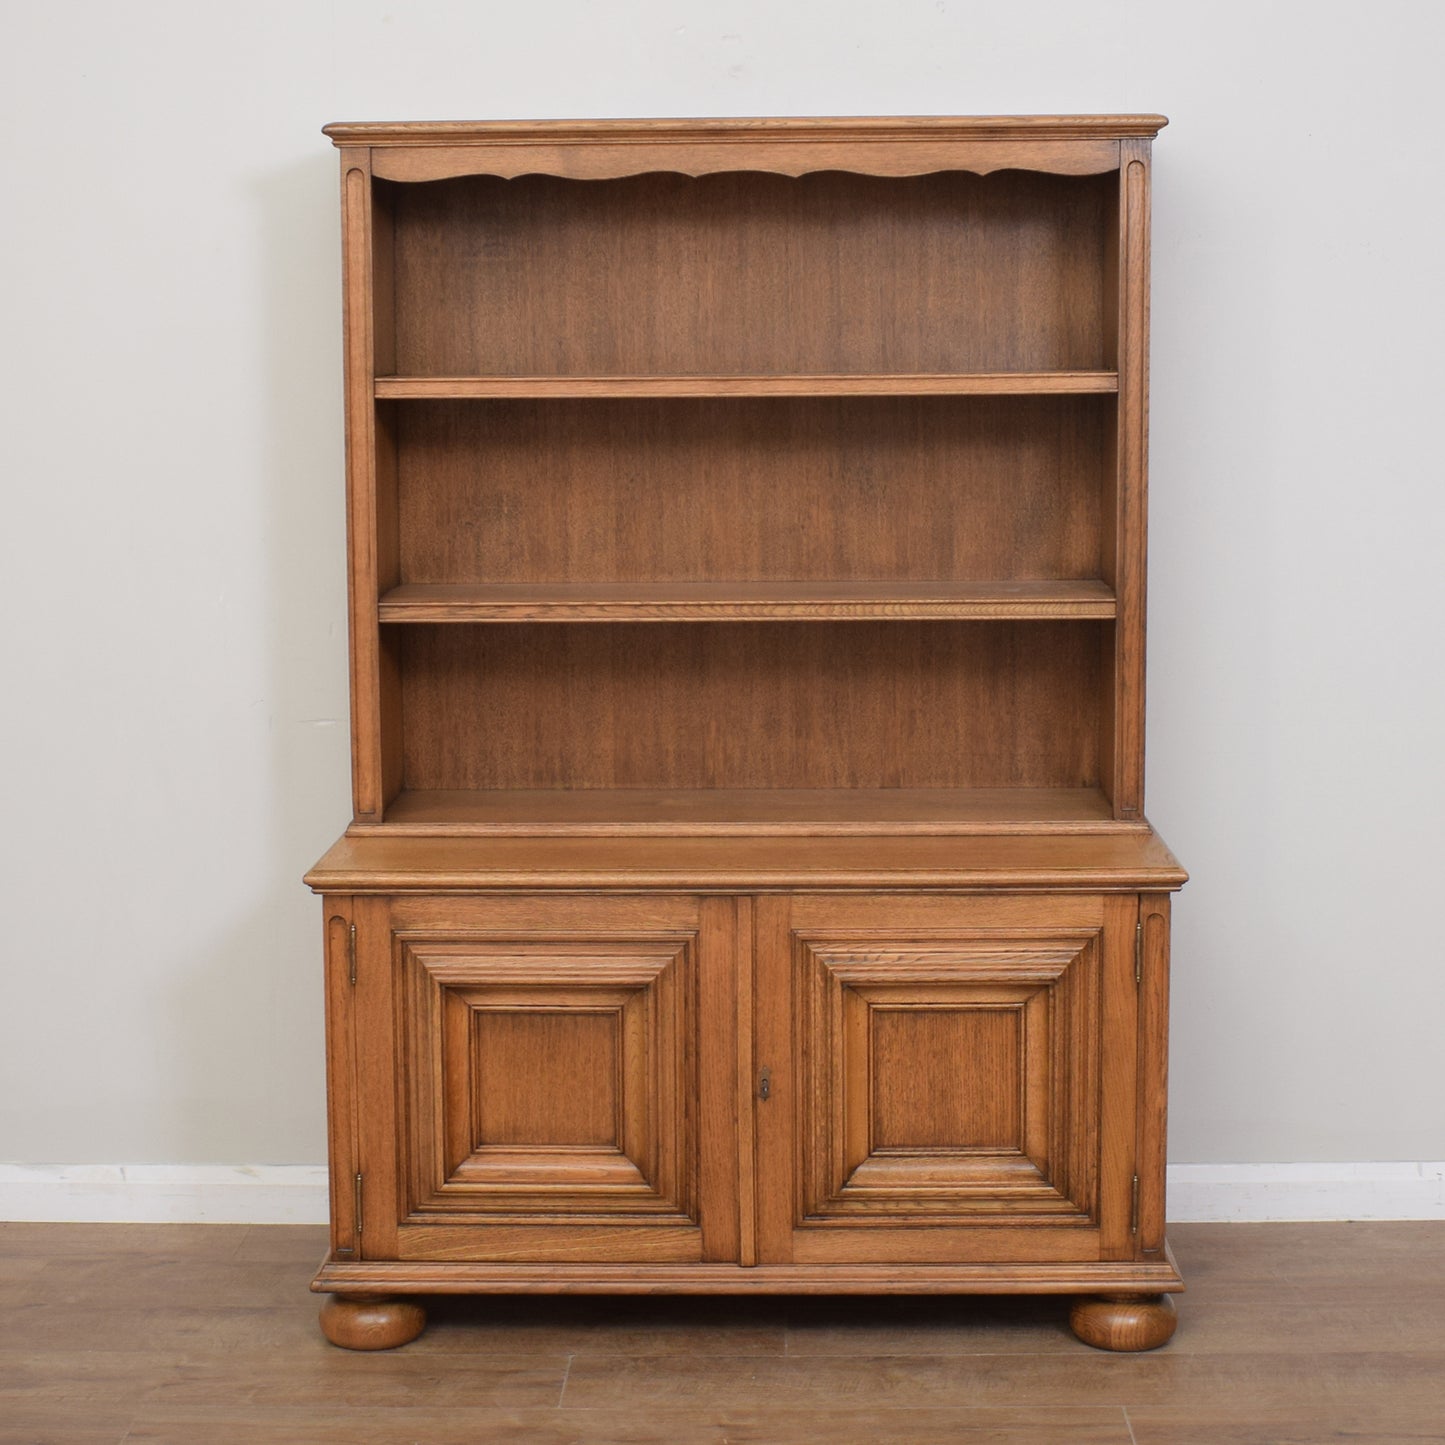 Oak Bookcase With Storage 
Cabinet